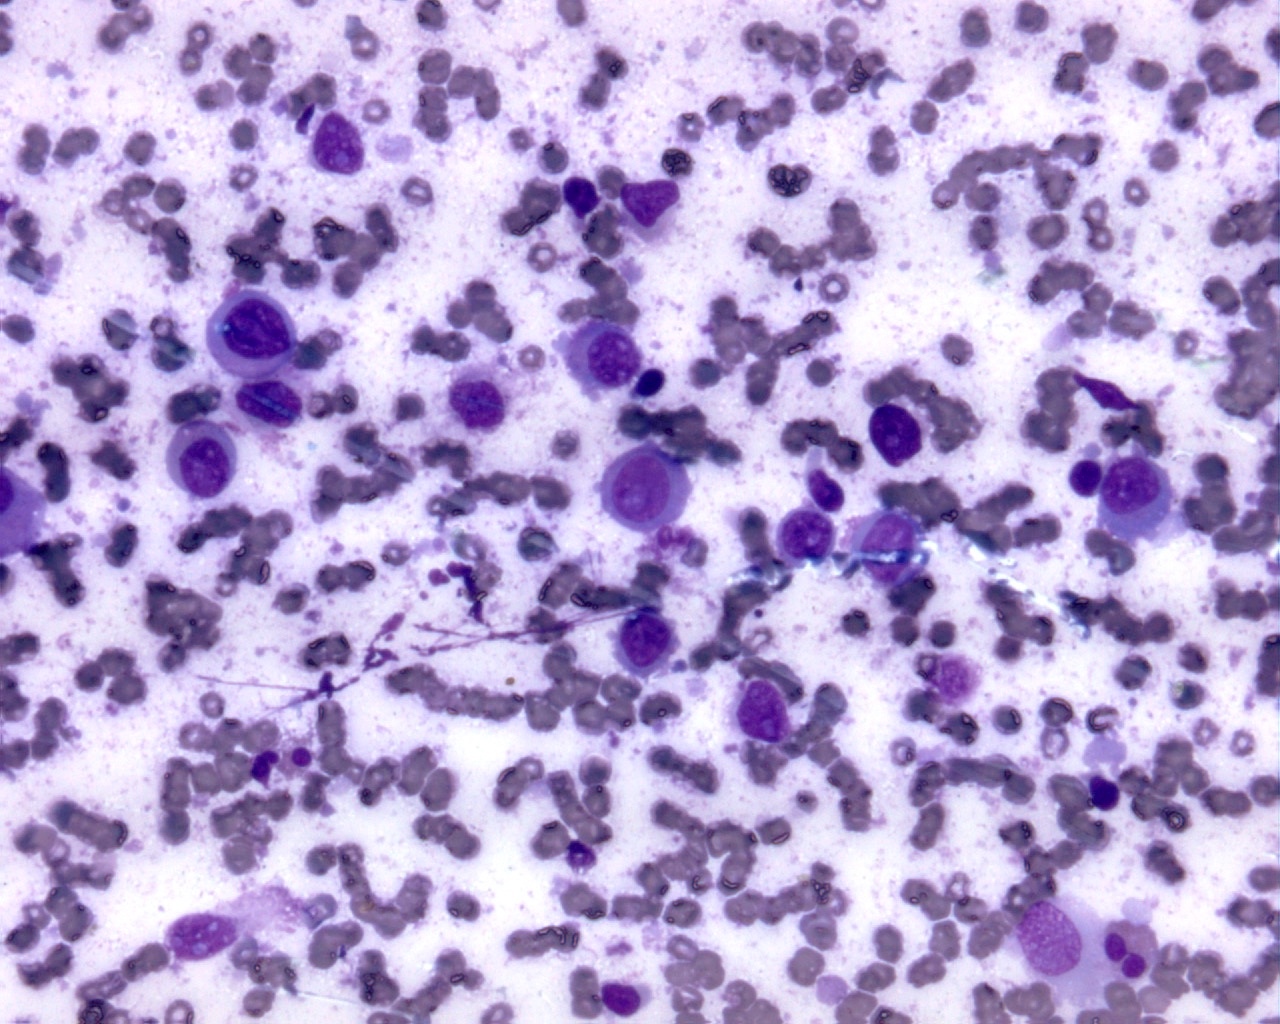 ALK positive large B cell lymphoma cells